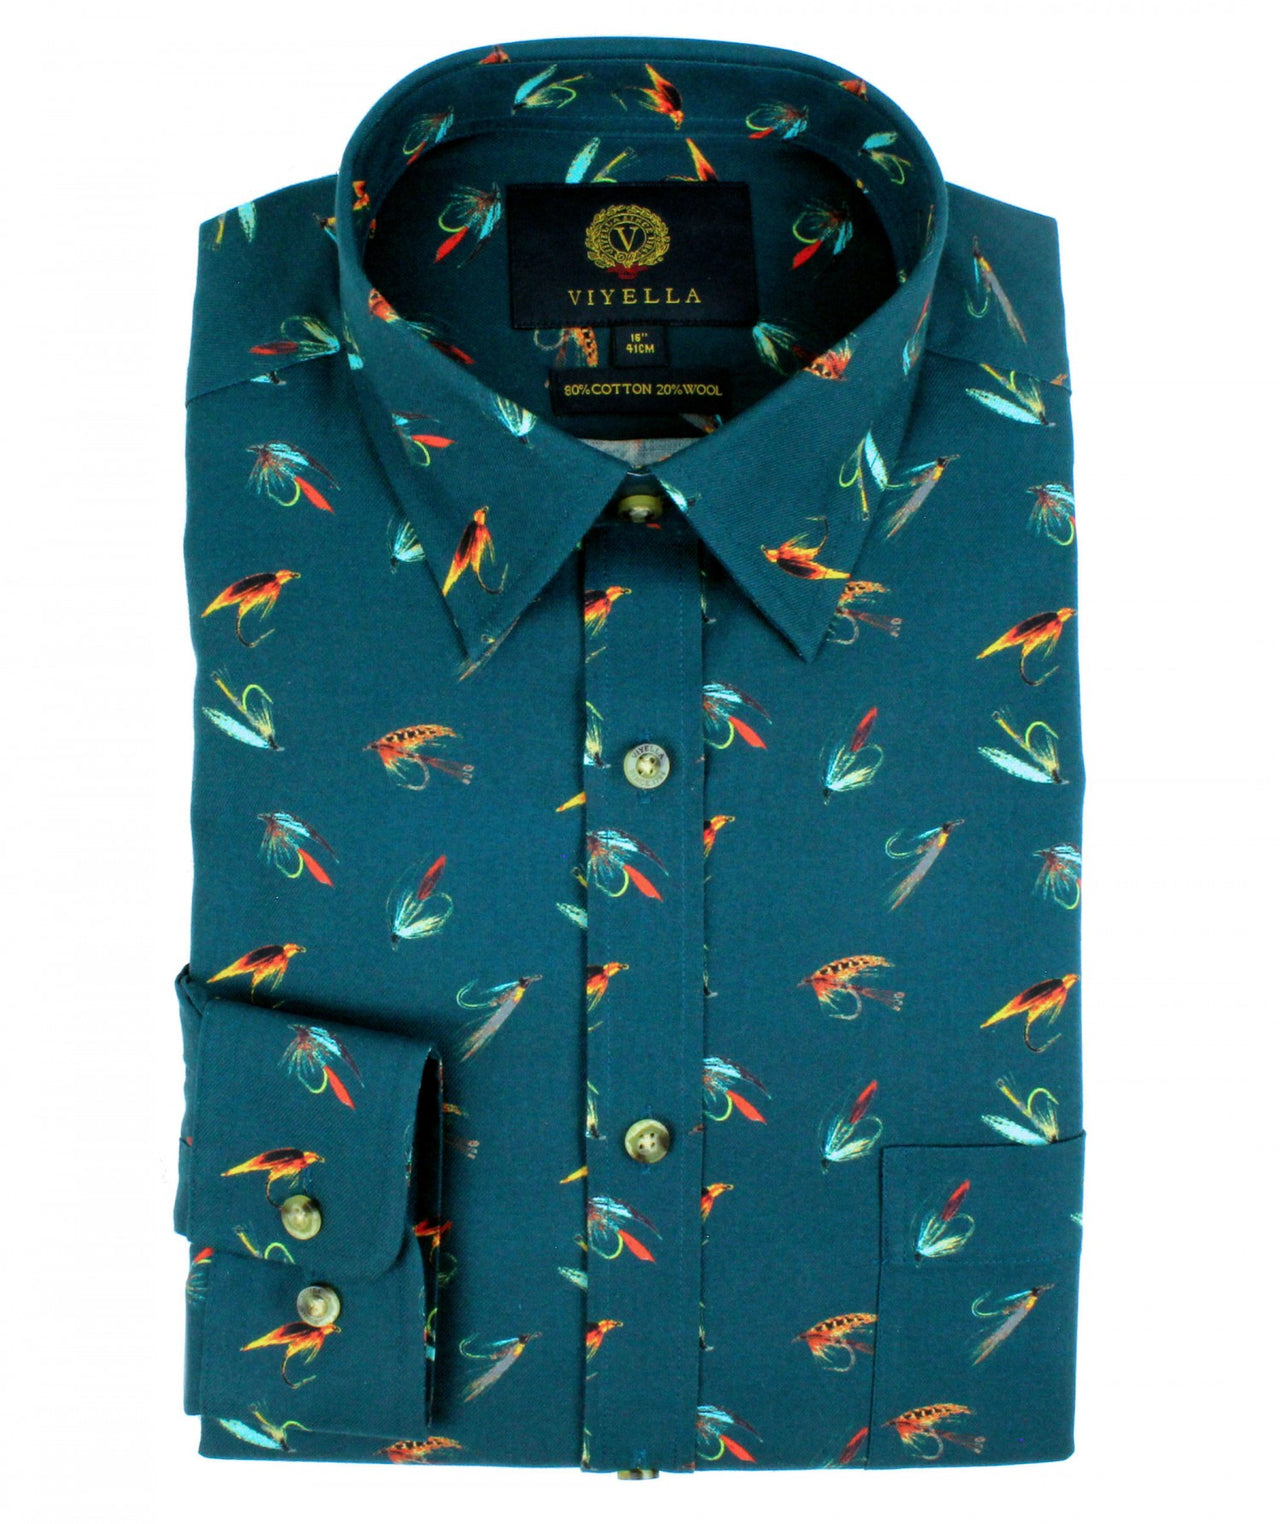 VIYELLA 80/20 Button Down Classic Shirt Boxed Luxury Pine Fly Fishing Print